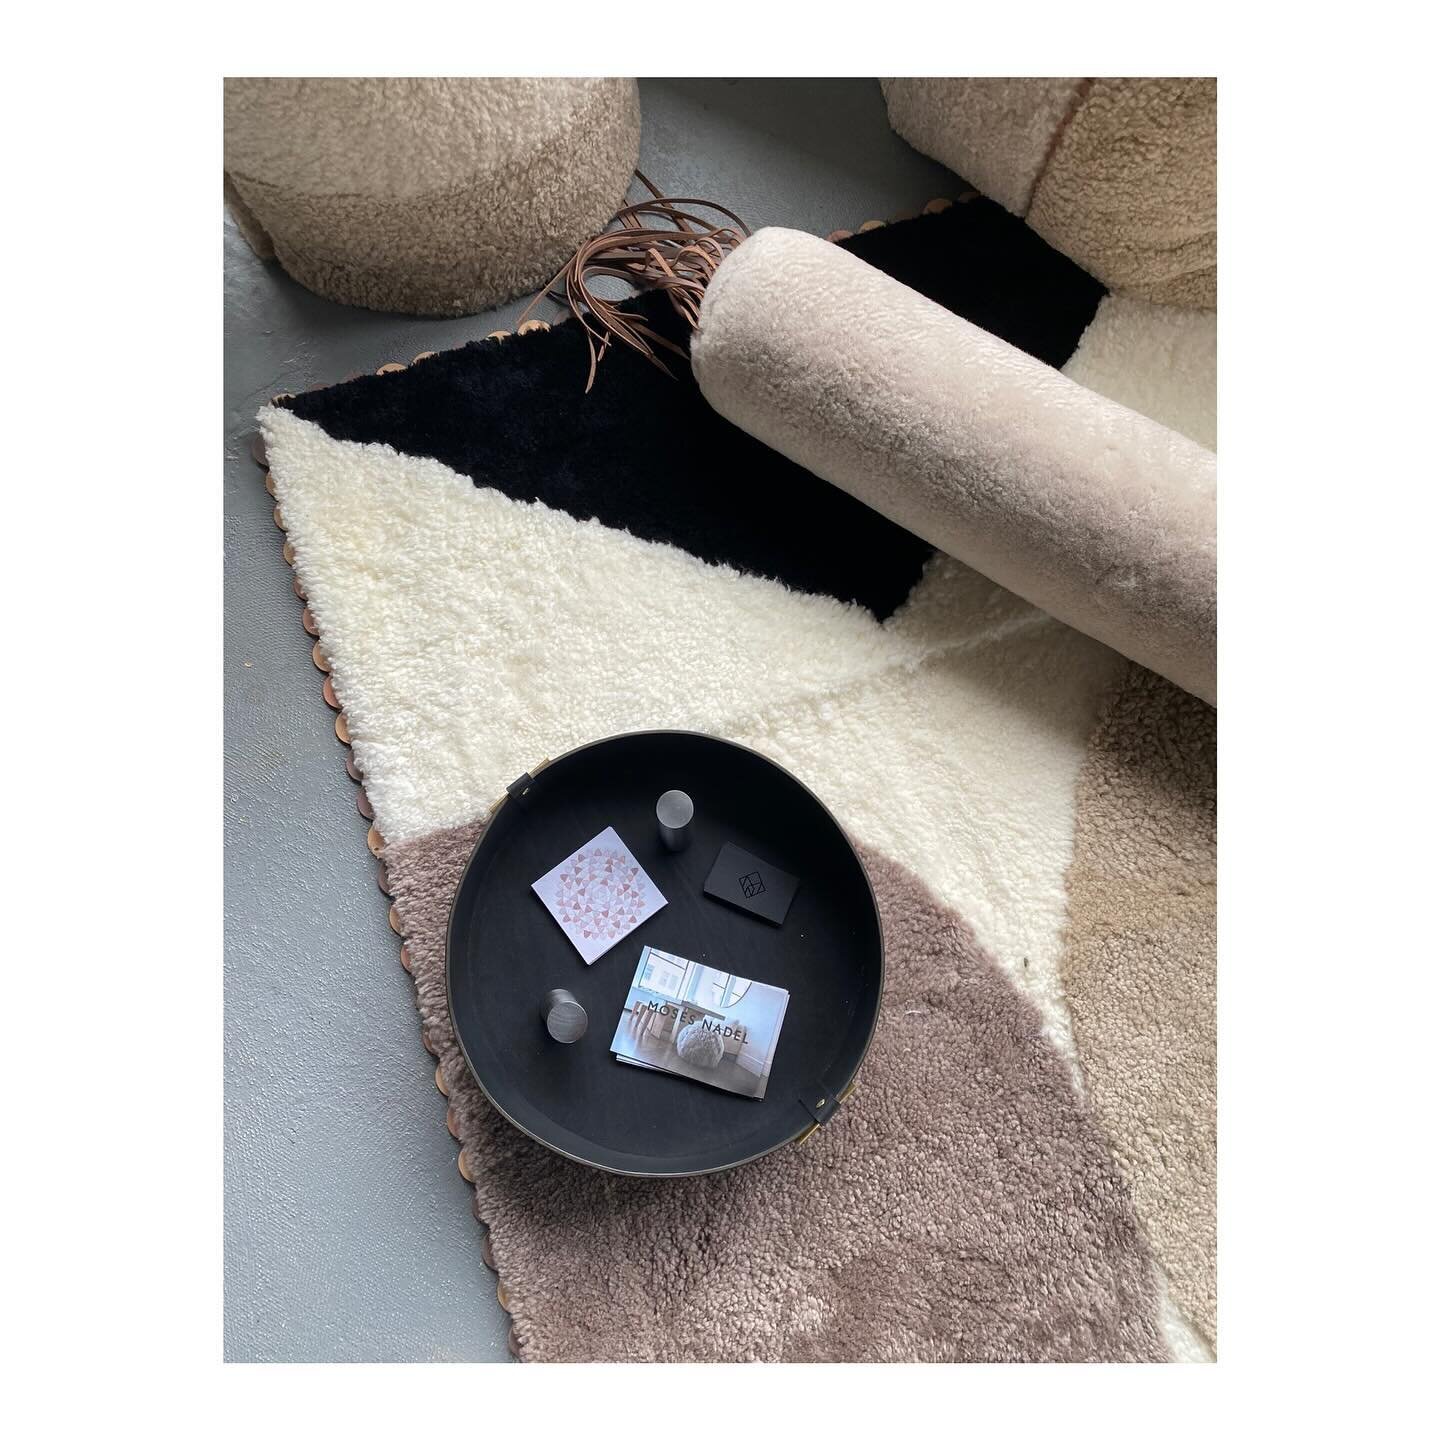 Cozy on up! Tis the season 🔥 @mosesnadel 

#mosesnadel #shearling #shearlingrug #jocoserug #shearlingbin #shearlingpillow #leathertray #leather #madetoorder #bespokeleather #custommade #artisanleathercraft #leathercraft #organic #modernism #art #sof